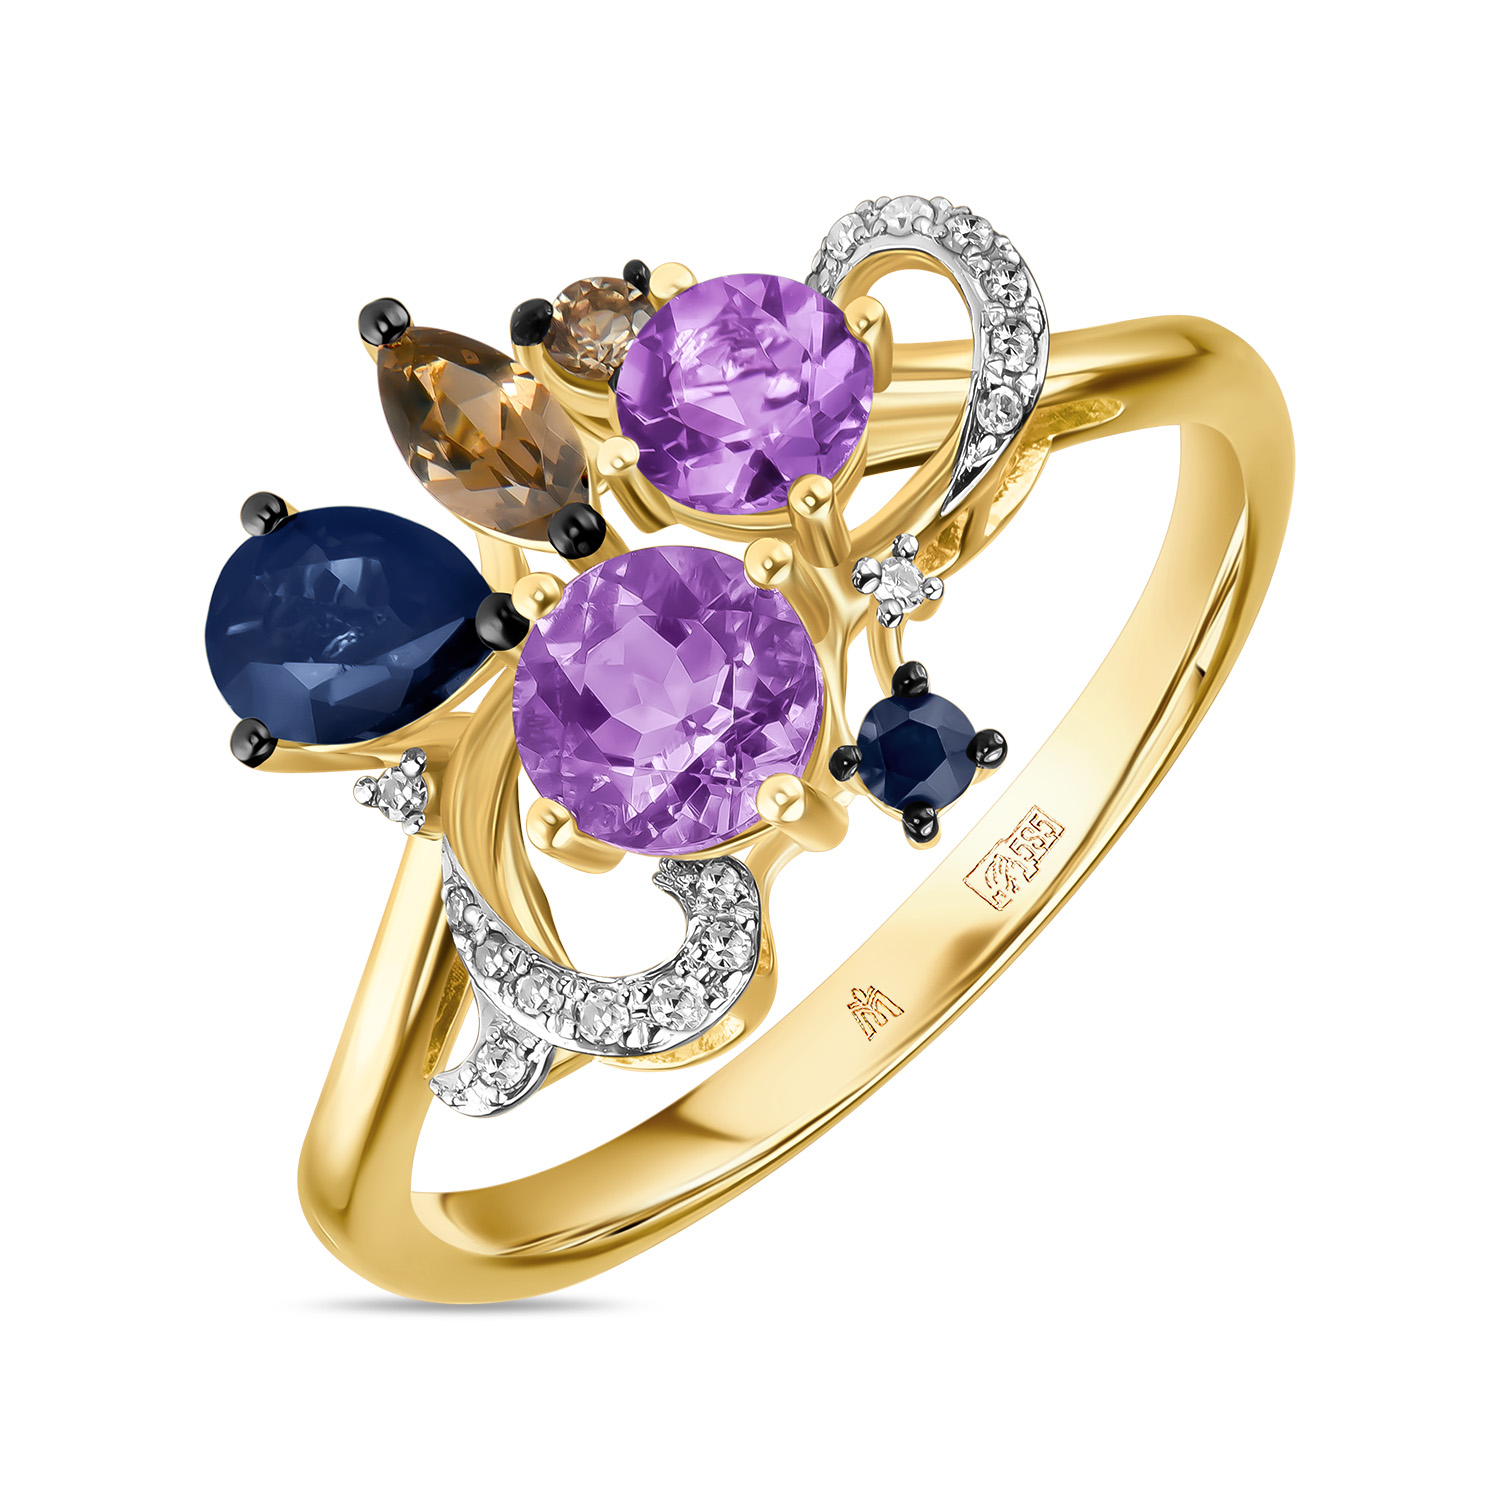 Кольца МЮЗ Золотое кольцо с аметистами, бриллиантами, сапфирами и кварцем кольца мюз золотое кольцо с агатом аметистами бриллиантами и цветными сапфирами